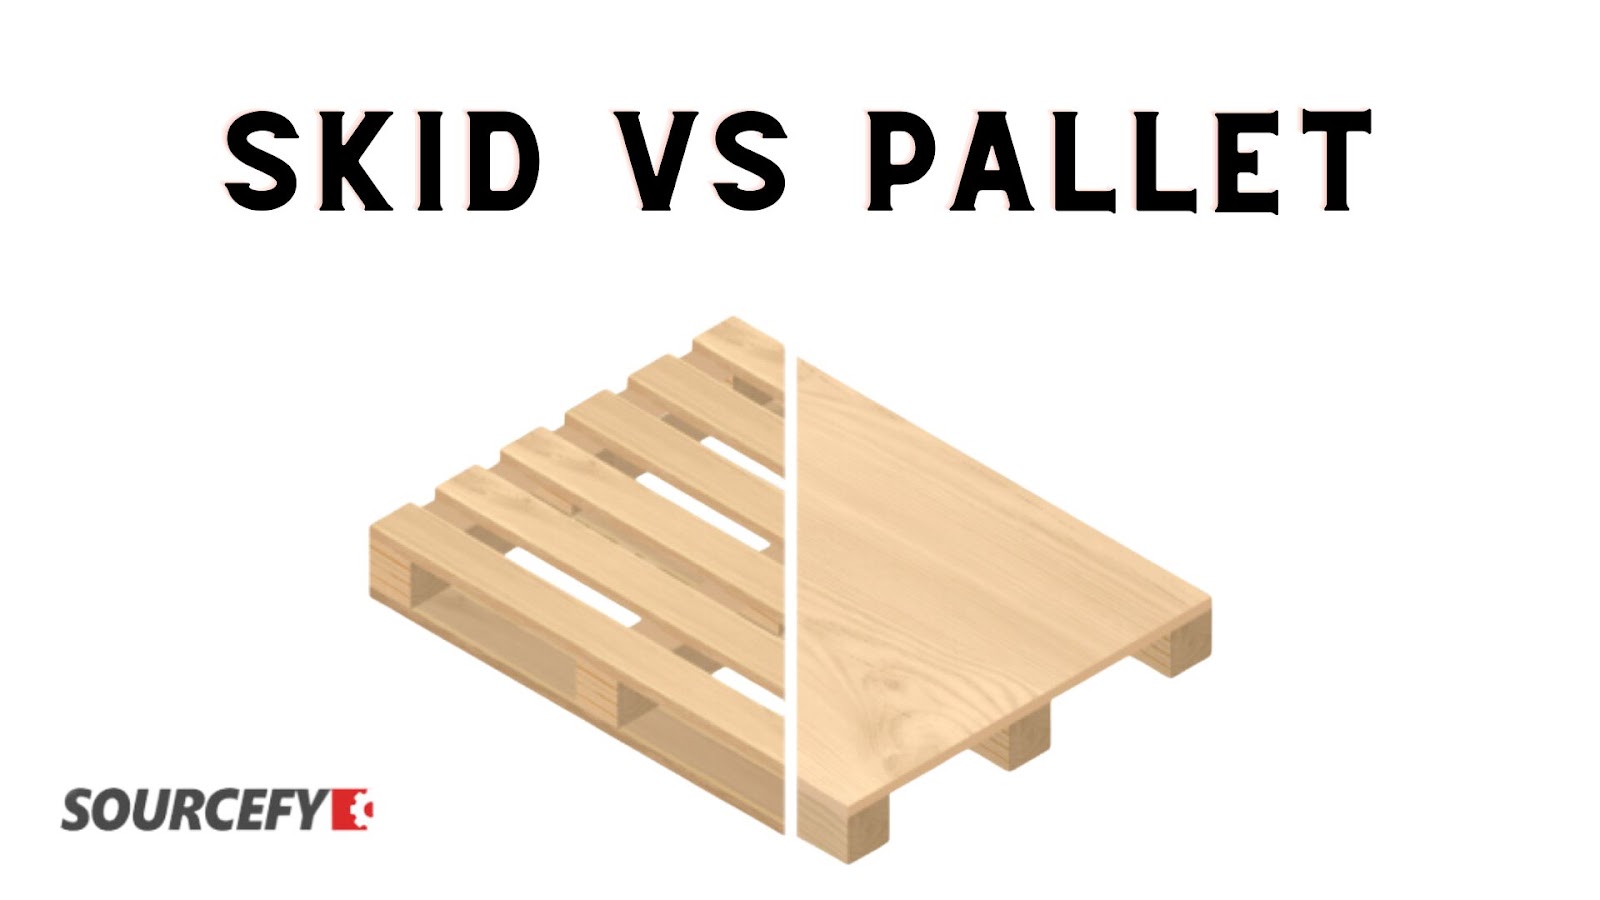 Skid vs Pallet